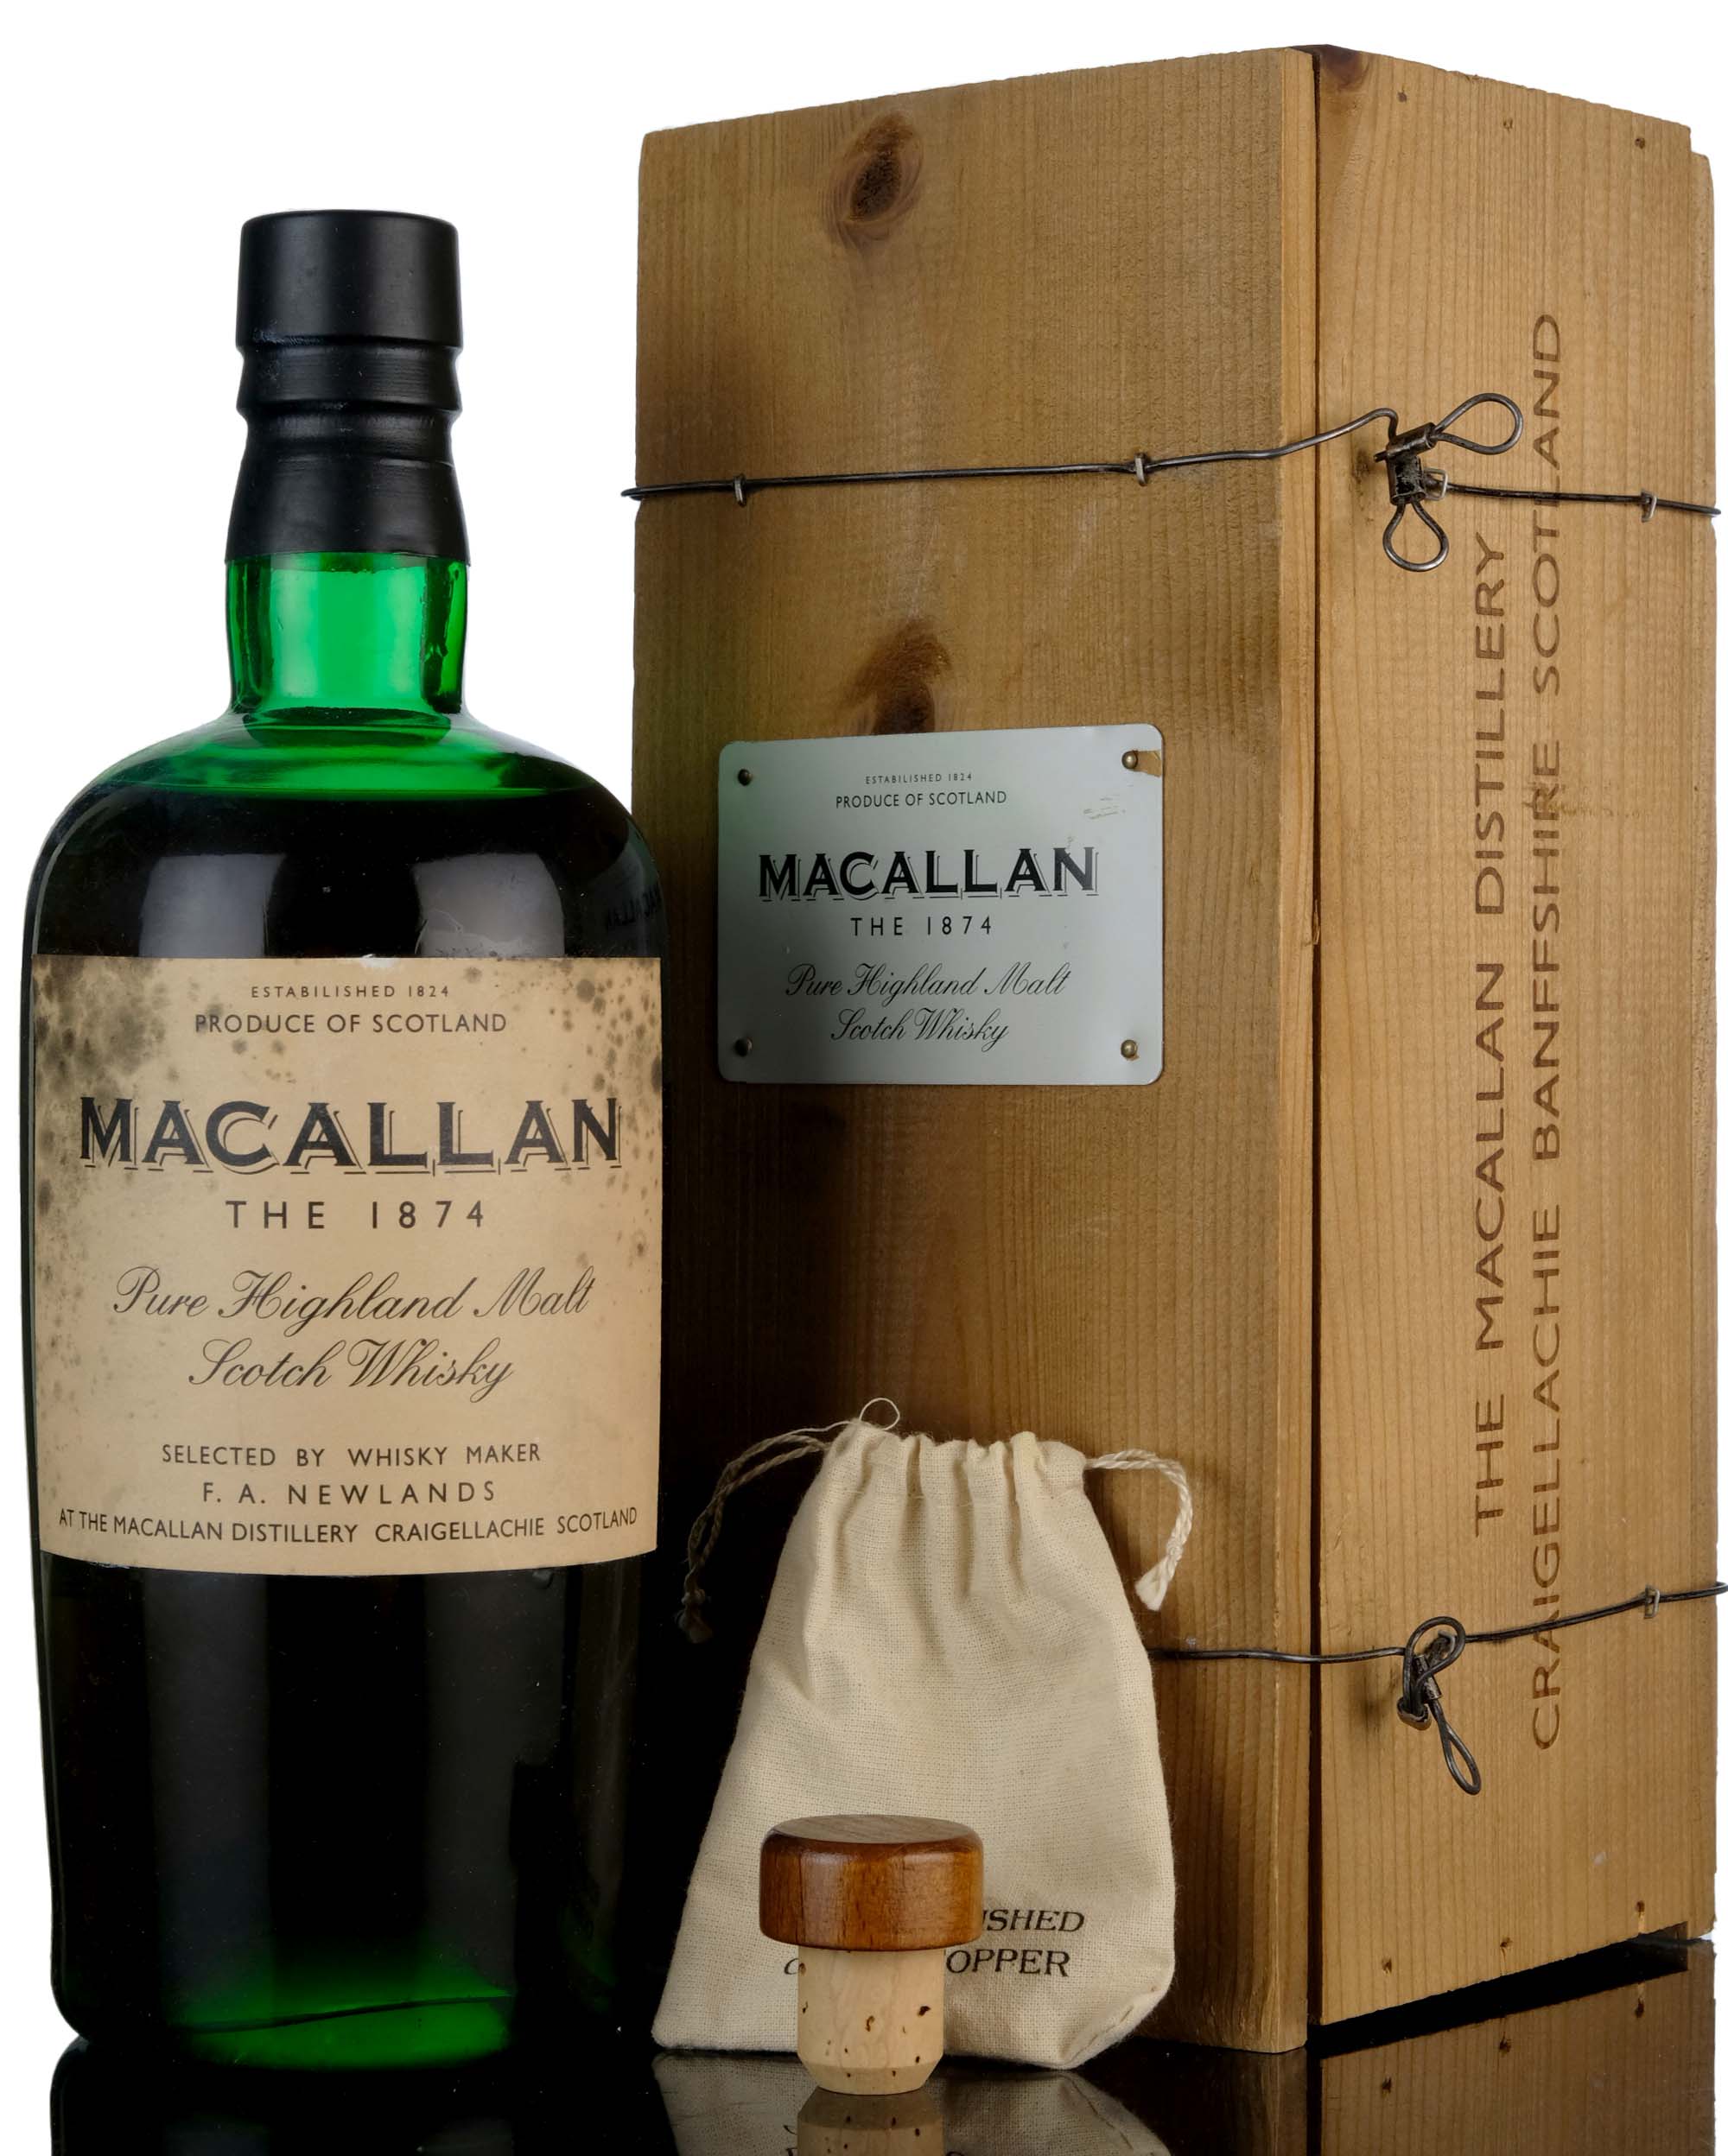 Macallan 1874 Replica - 2002 Release